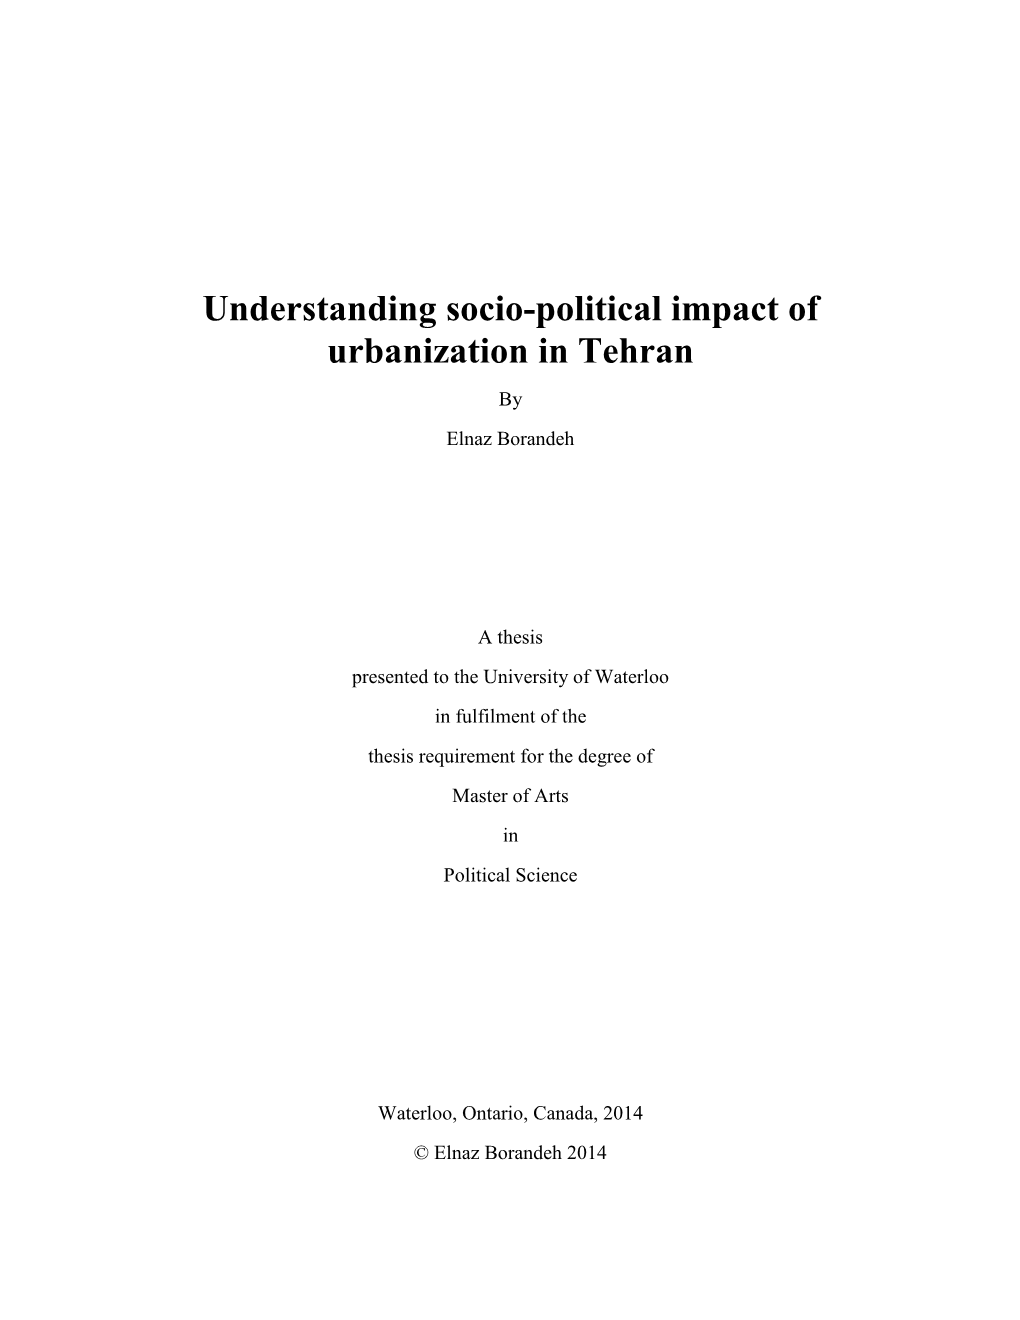 Understanding Socio-Political Impact of Urbanization in Tehran by Elnaz Borandeh